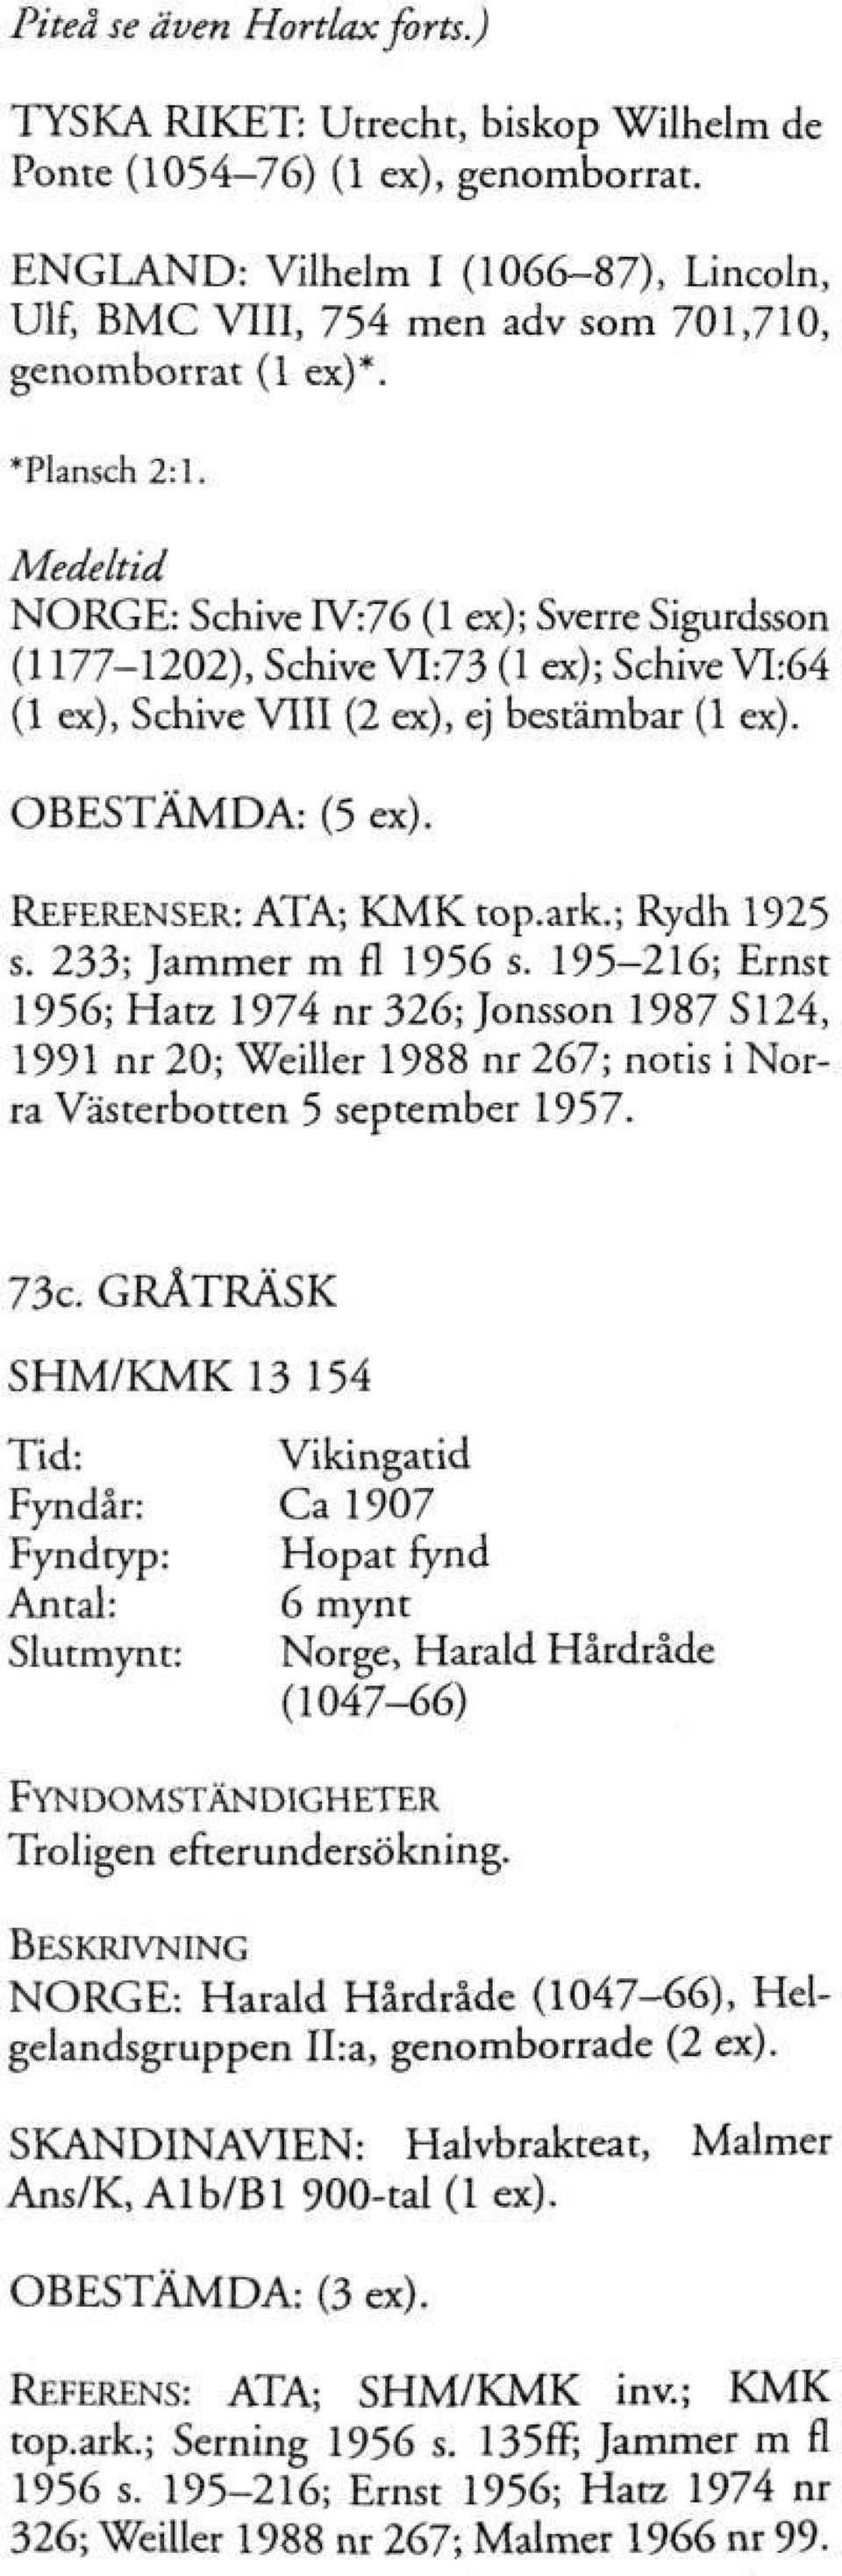 NORGE: Schive IV:76 (1 ex); Sverre Sigurdsson (1177-1202), Schive VL73 (1 ex); Schive VI.-64 (1 ex), Schive VIII (2 ex), ej bestämbar (1 ex). OBESTÄMDA: (5 ex). REFERENSER: ATA; KMK top.ark.